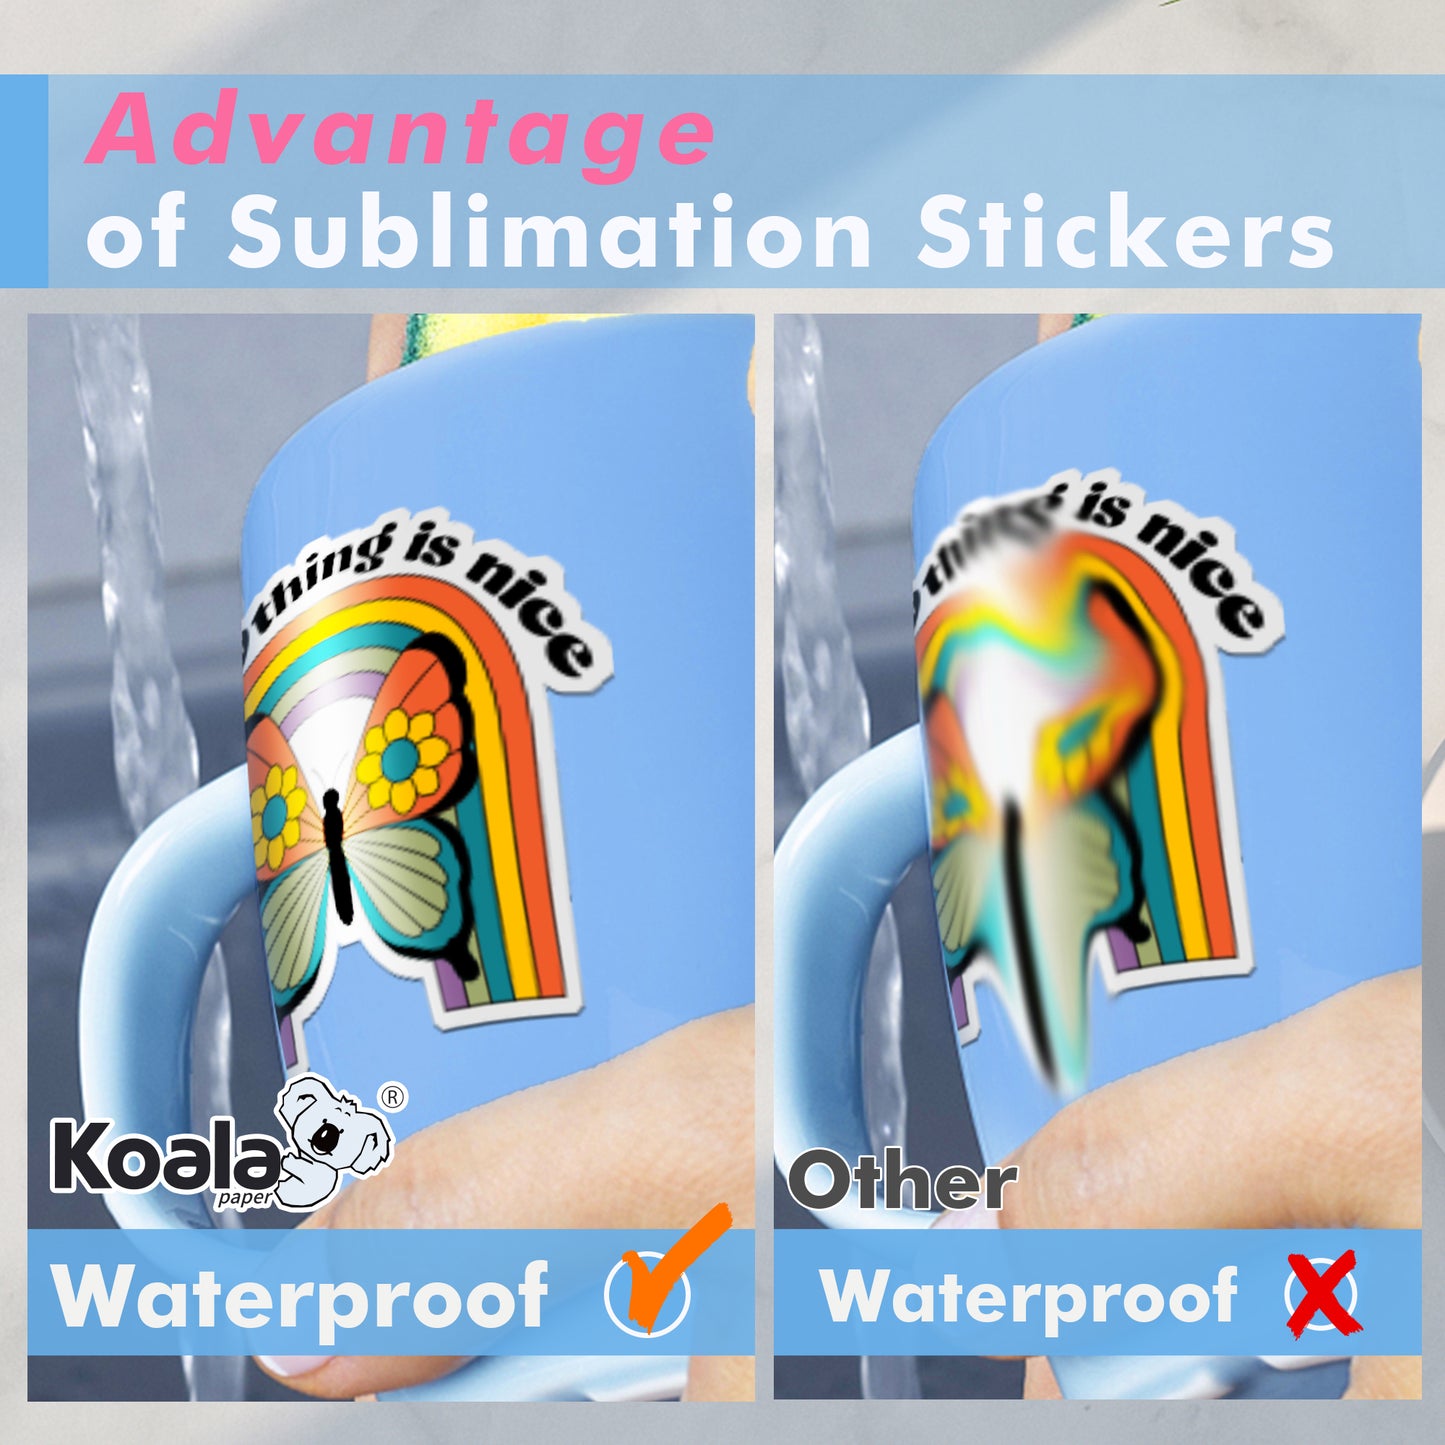 Koala 100% Sublimation Sticker Paper 25 Sheets- Glossy White Without back watermark